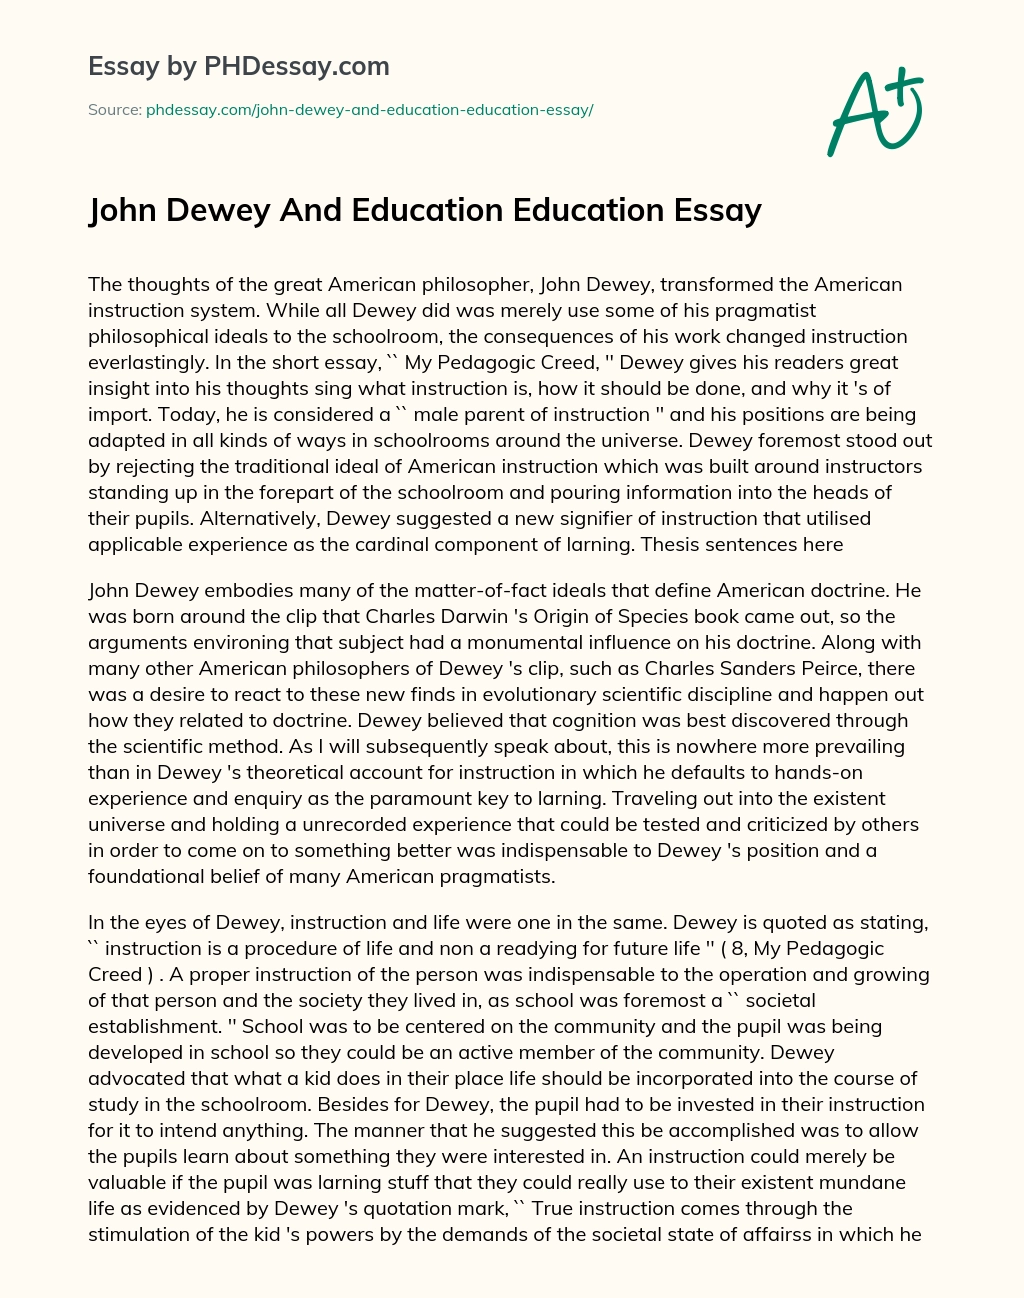 John Dewey And Education Education Essay essay